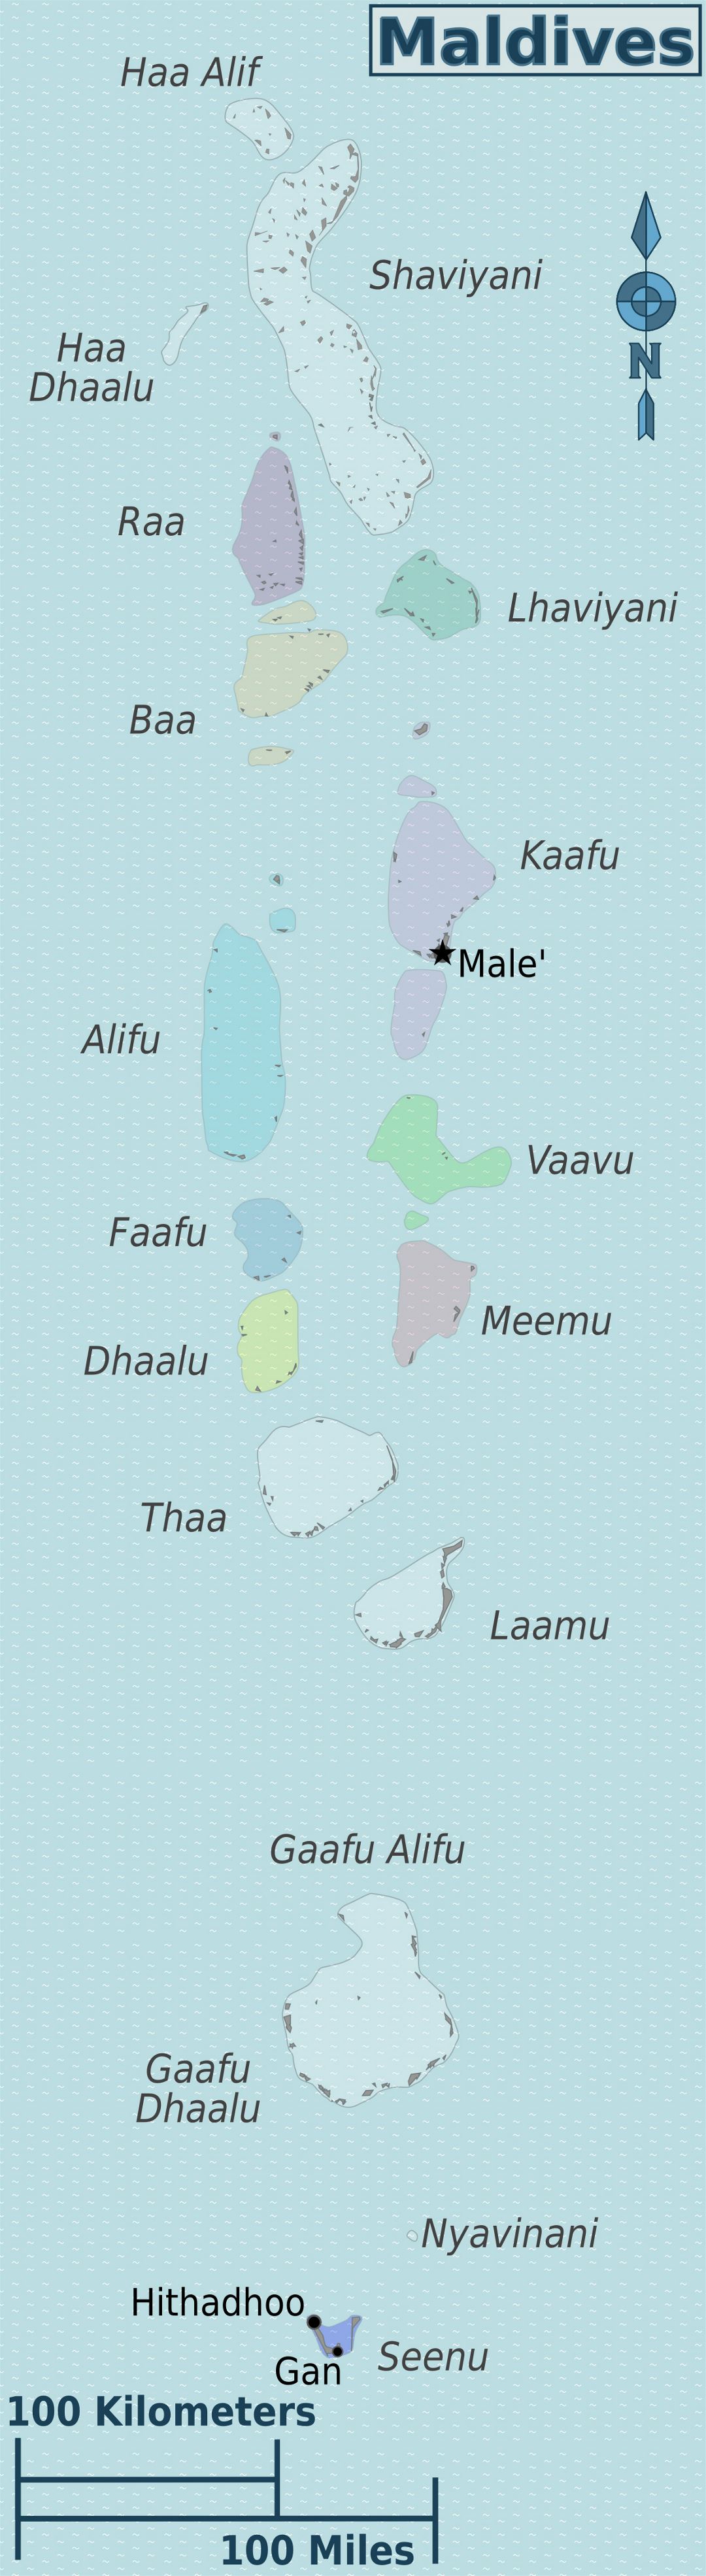 Large regions map of Maldives